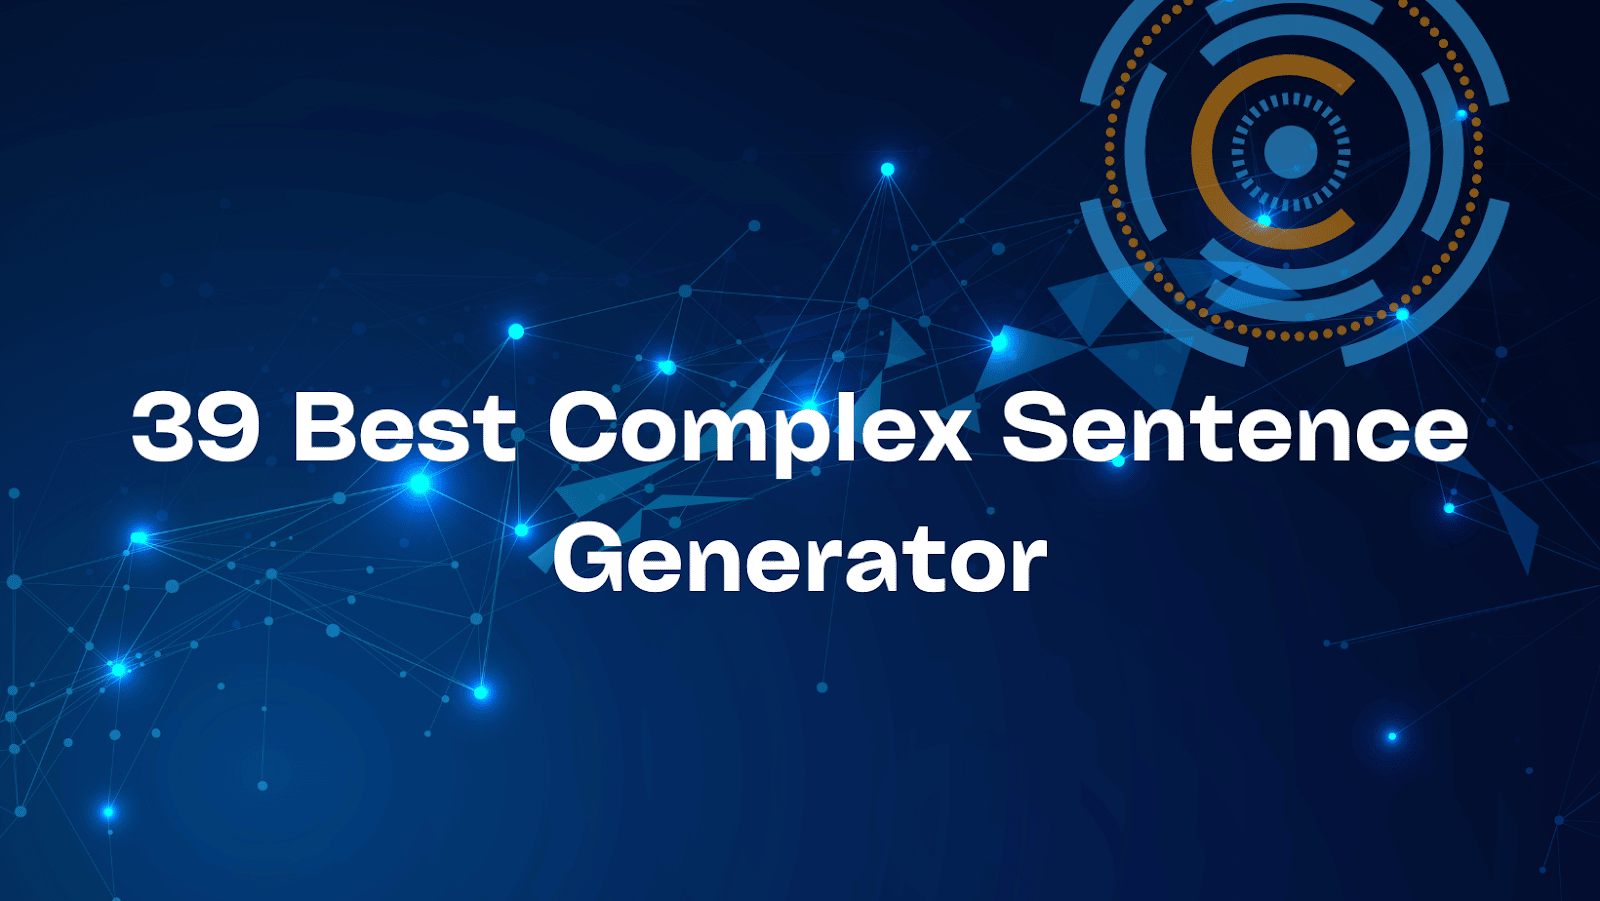 Complex Sentence Generator